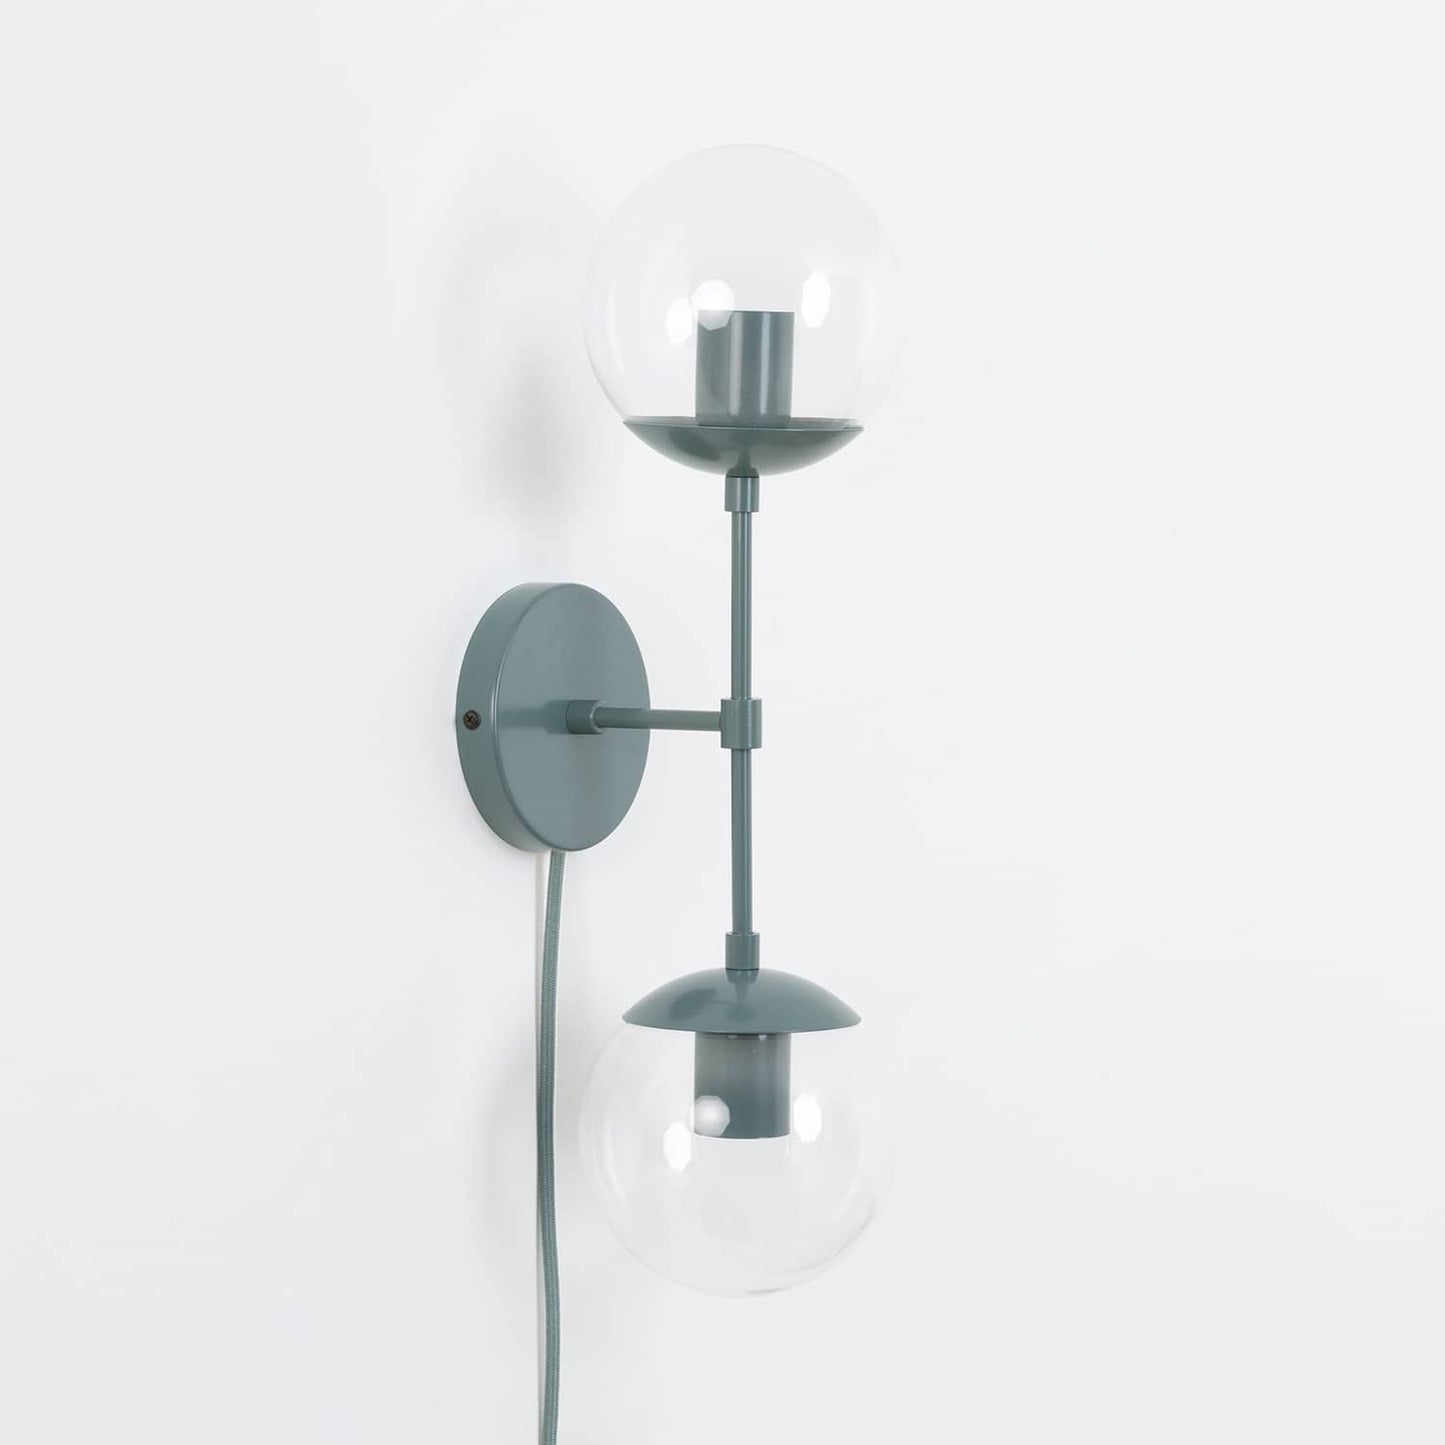 Mod Glass Double Globe Plug-In Sconce